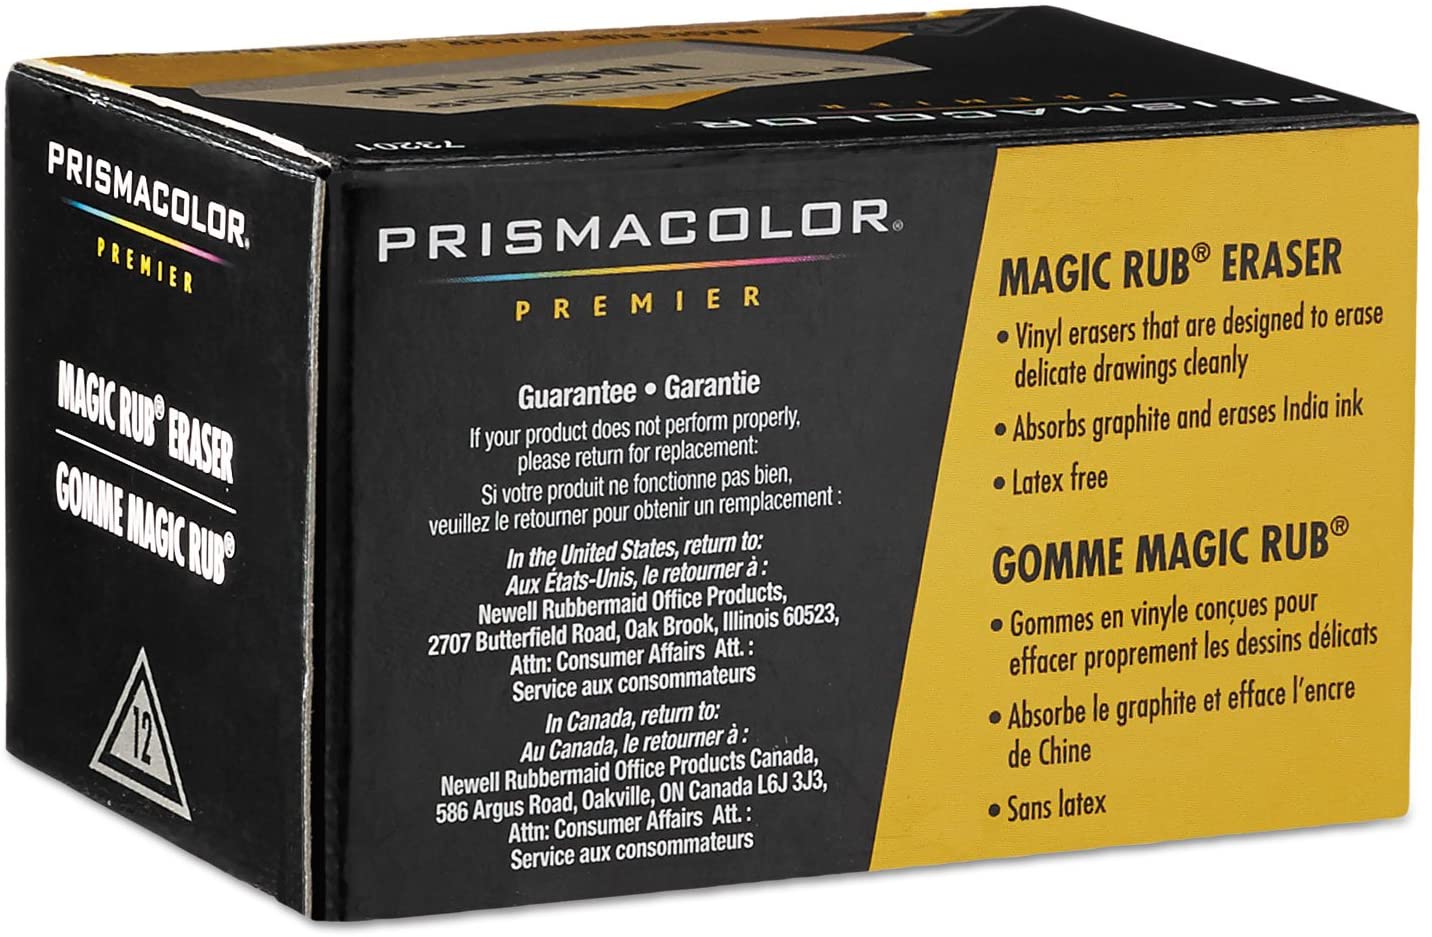 Prismacolor Magic Rub Eraser back of the box